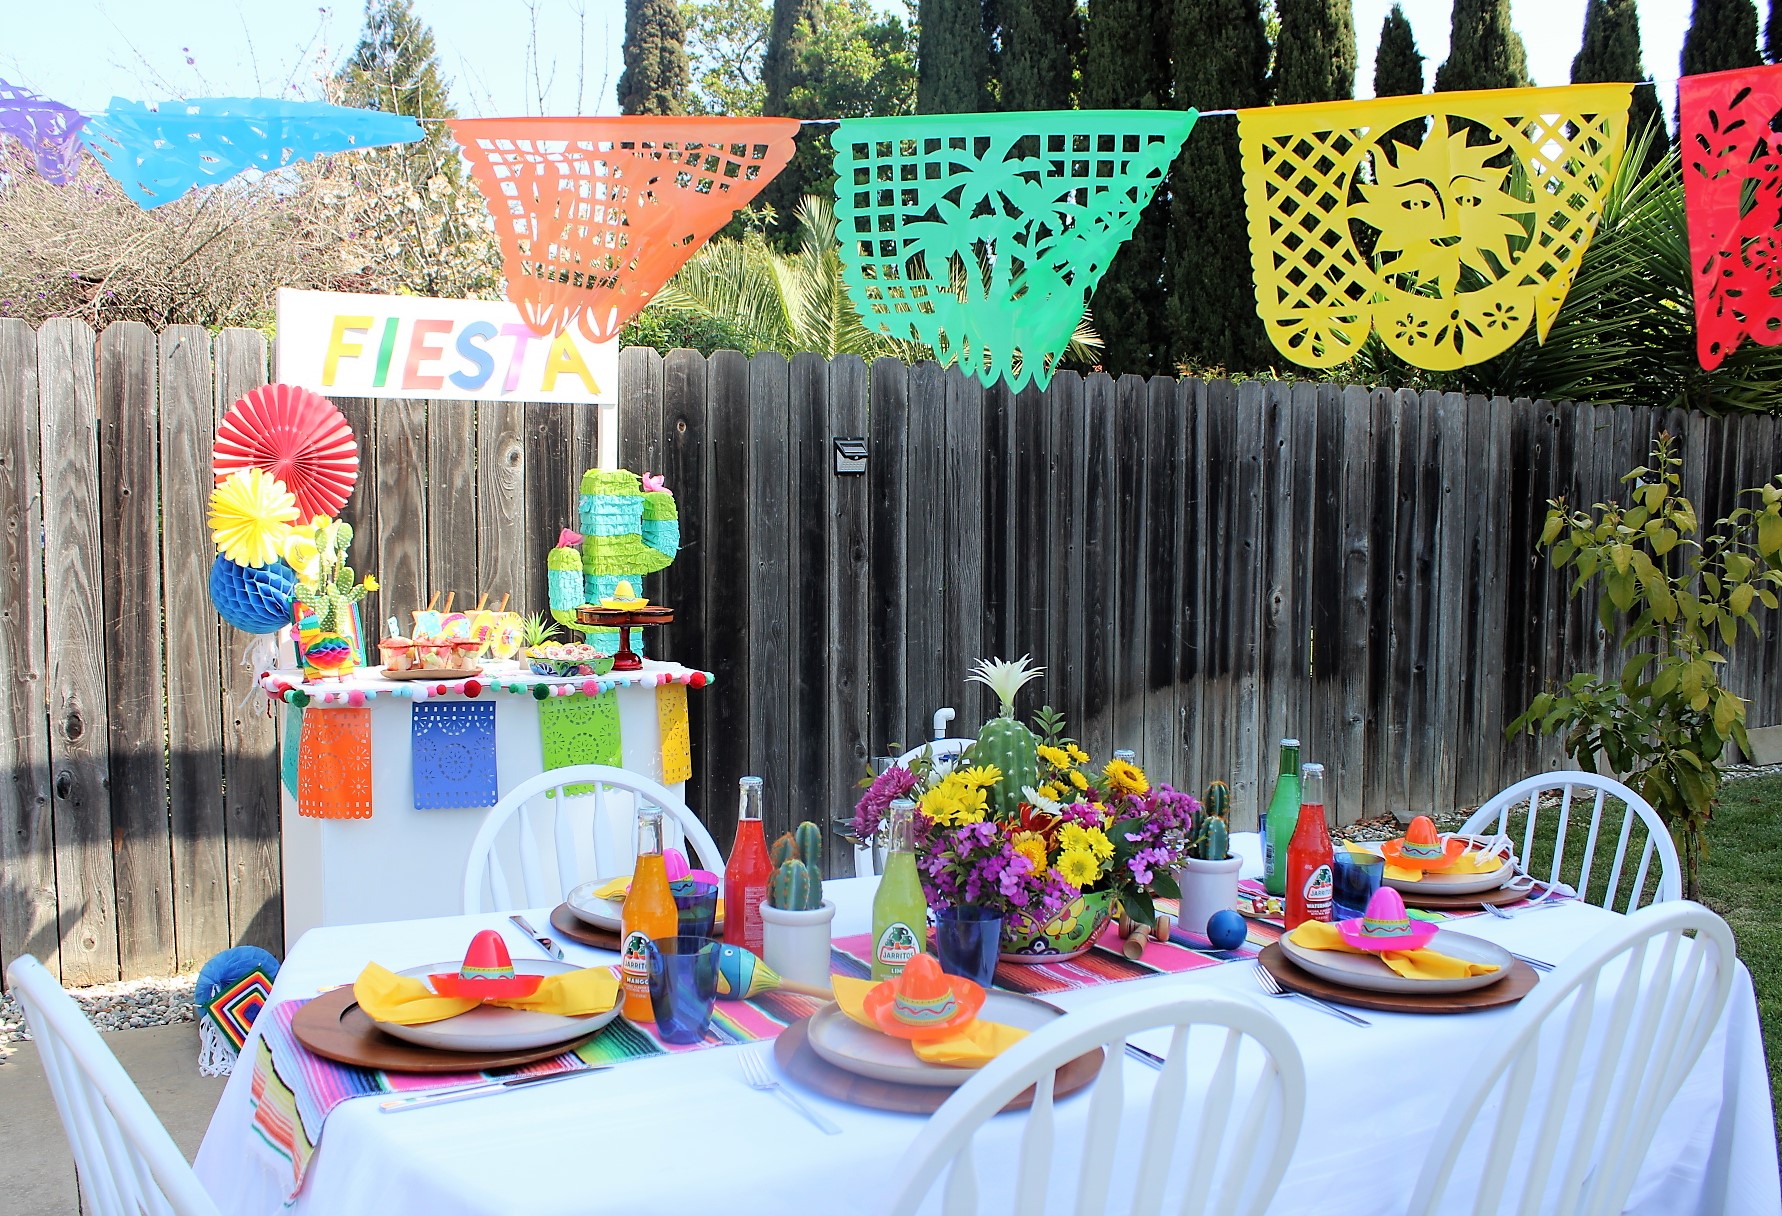 Mexican Fiesta Party Decorations - Cinco De Mayo - 6 Paper Fans, 5